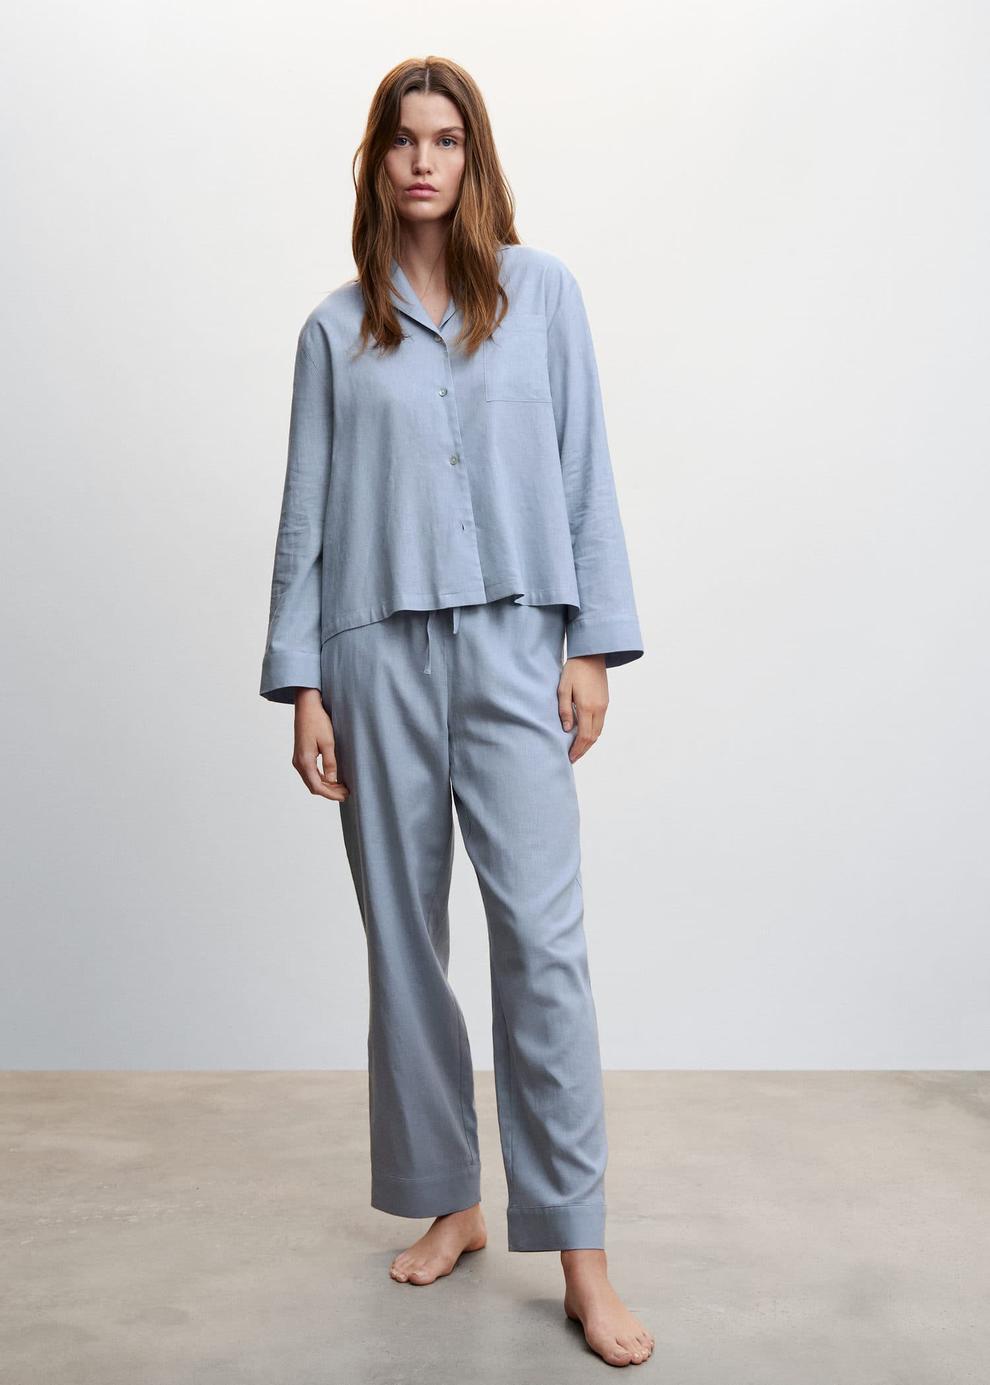 Linen pyjama shirt offers at R 799 in Mango